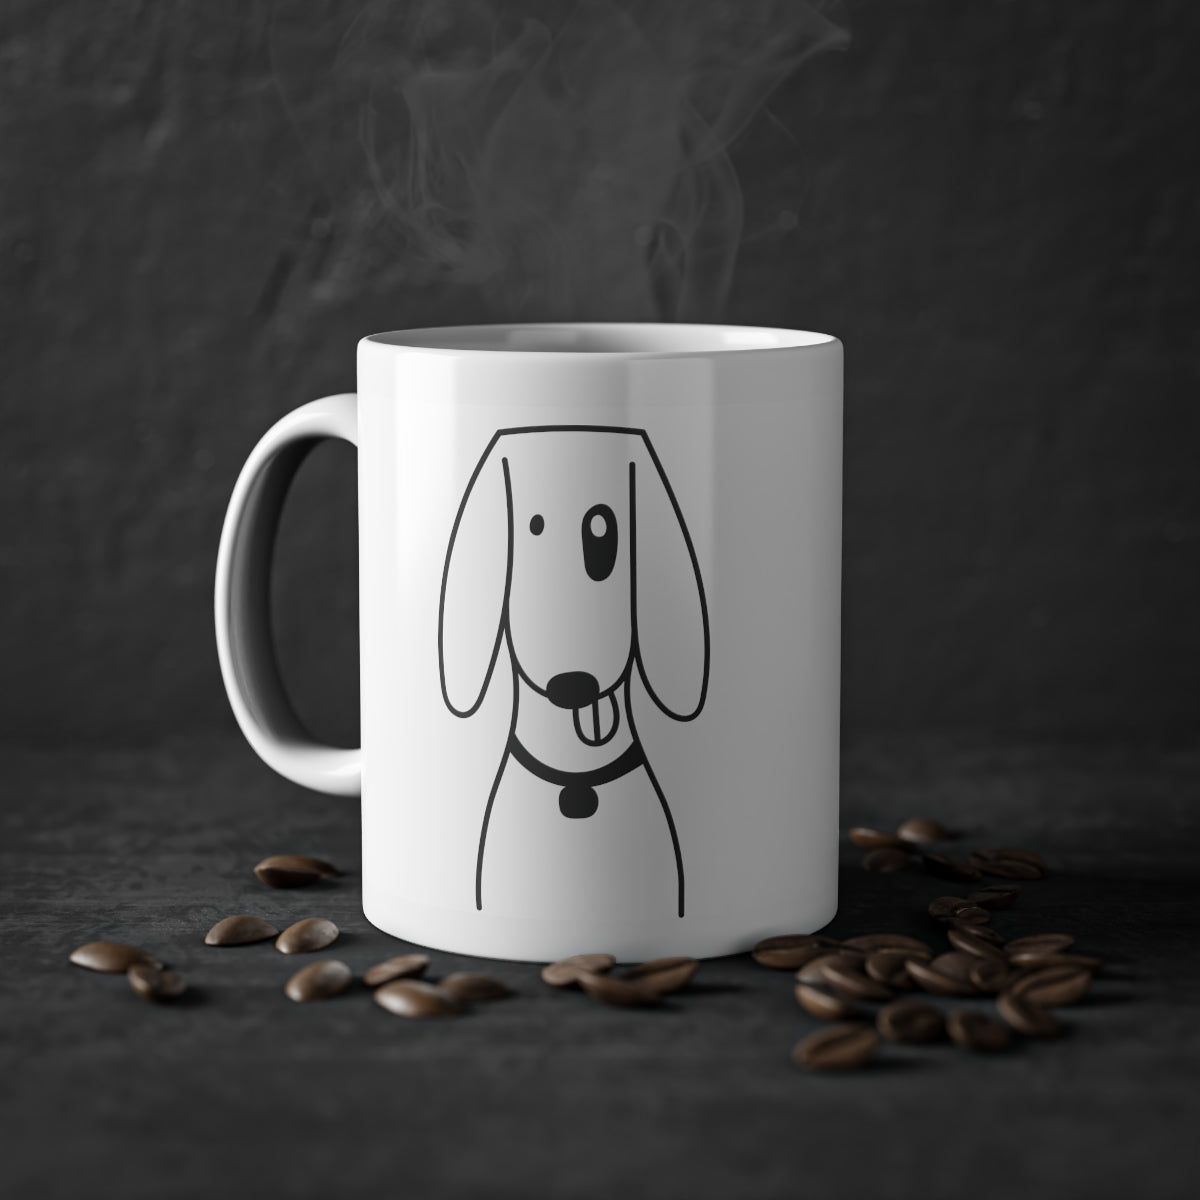 Cute dog Foxhund mug, white, 325 ml / 11 oz Coffee mug, tea mug for kids, children, puppies mug for dog lovers, dog owners